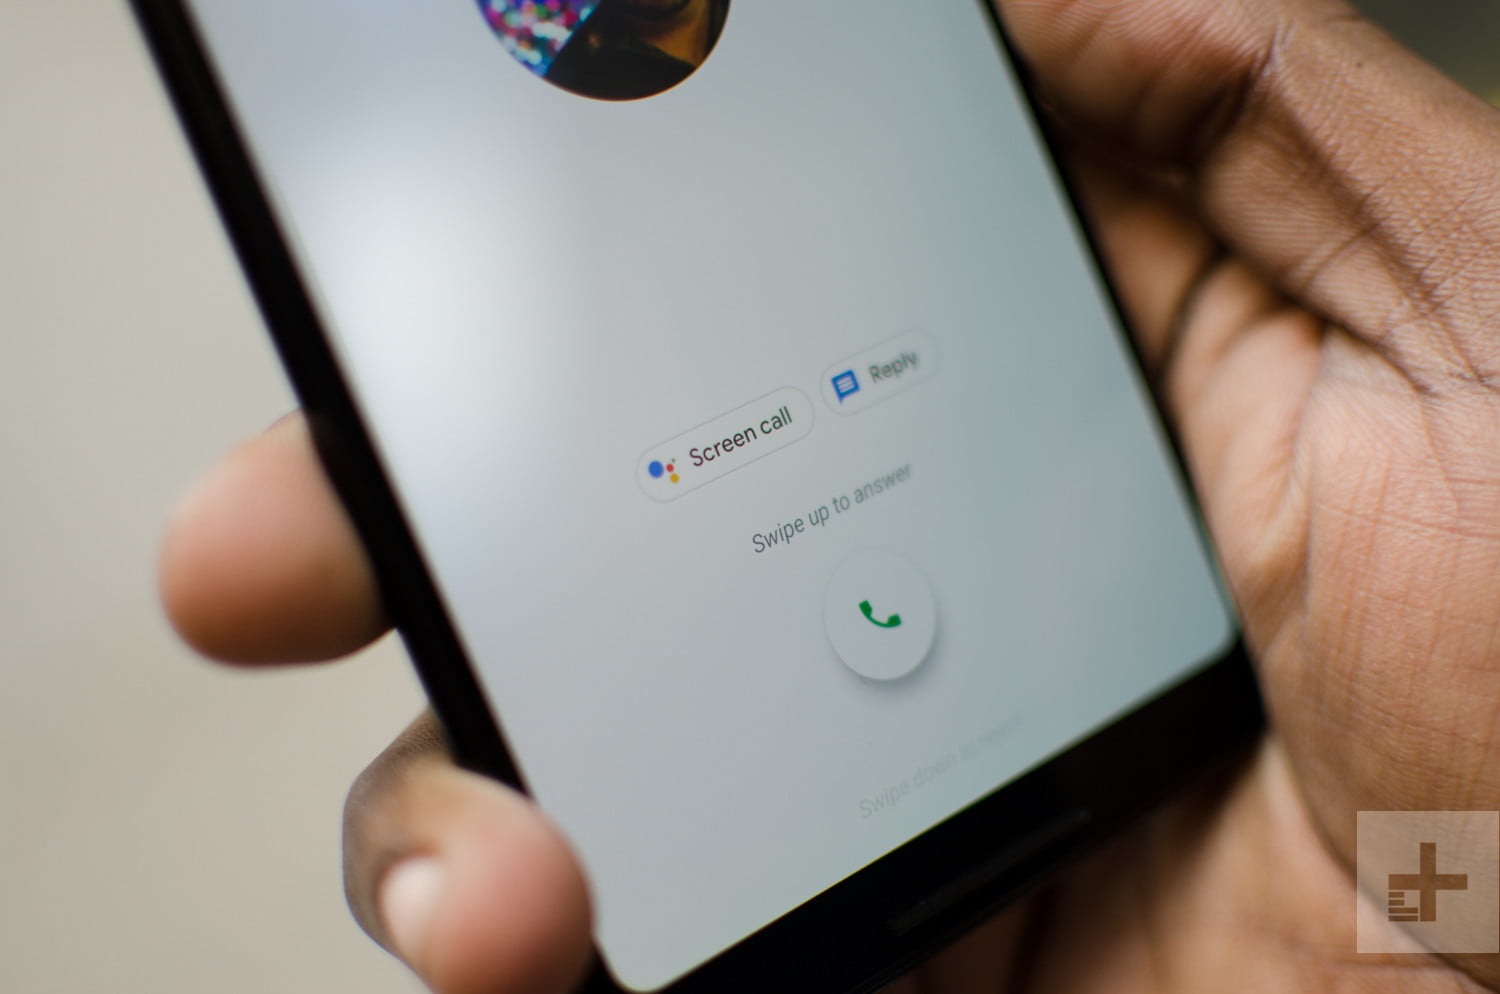 Google phone call screening